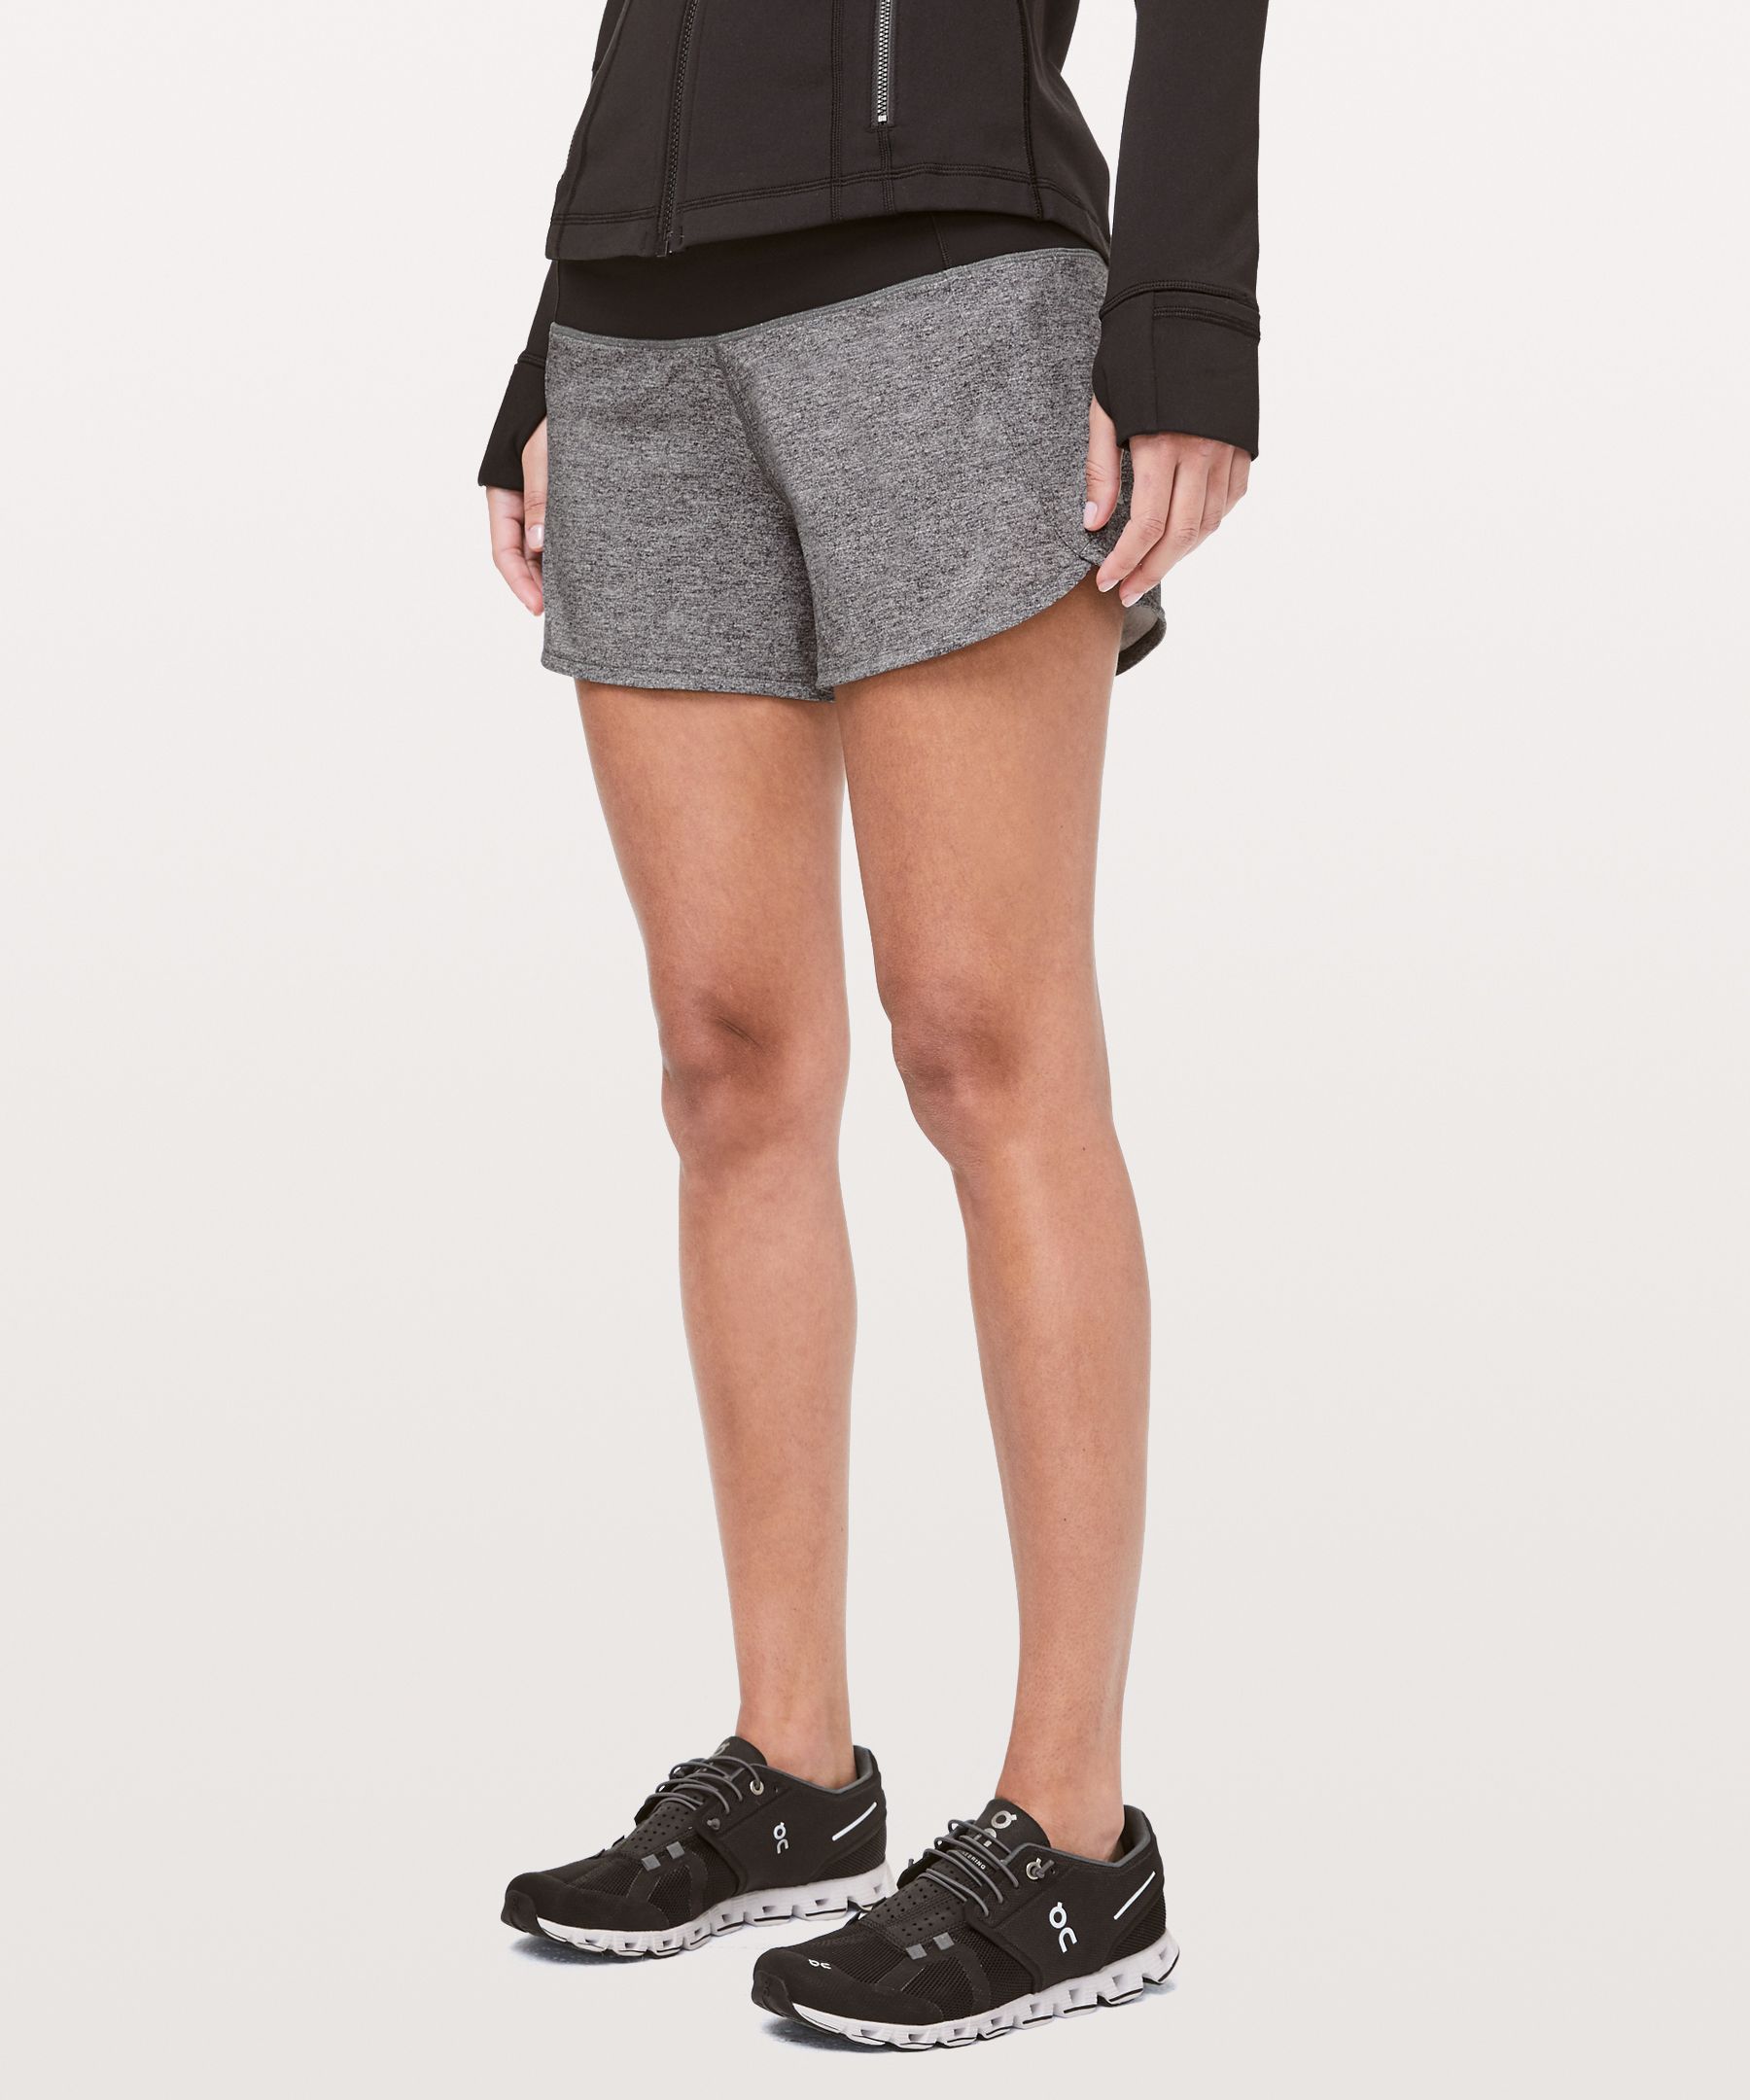 Lululemon Black Run Times Shorts Built in Underwear Size 6 - $50 - From  Emily